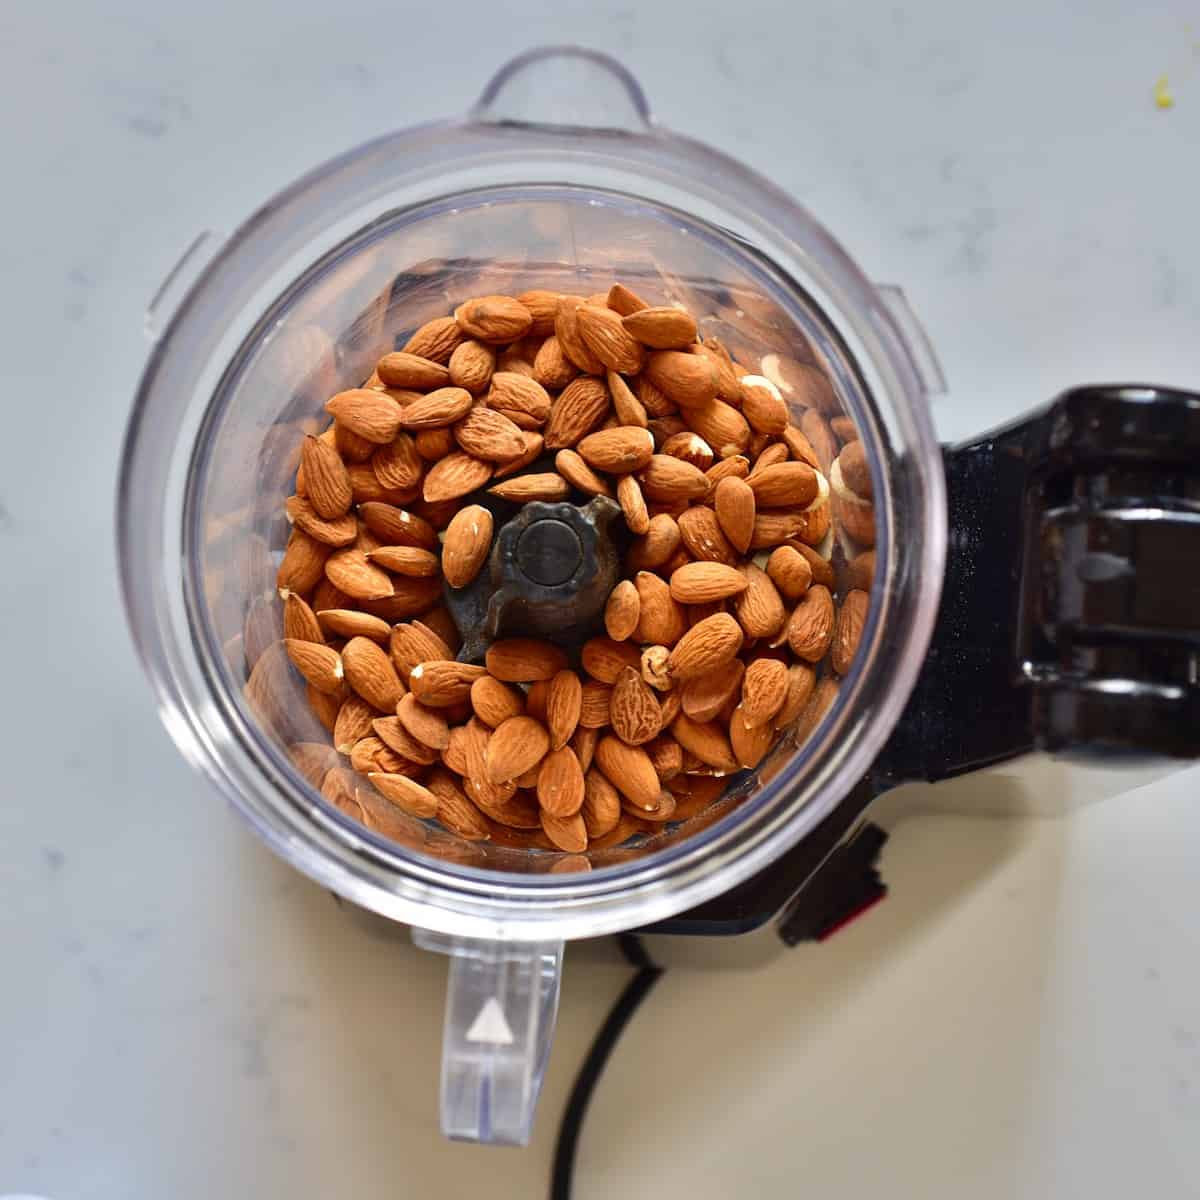 Almonds in a blender